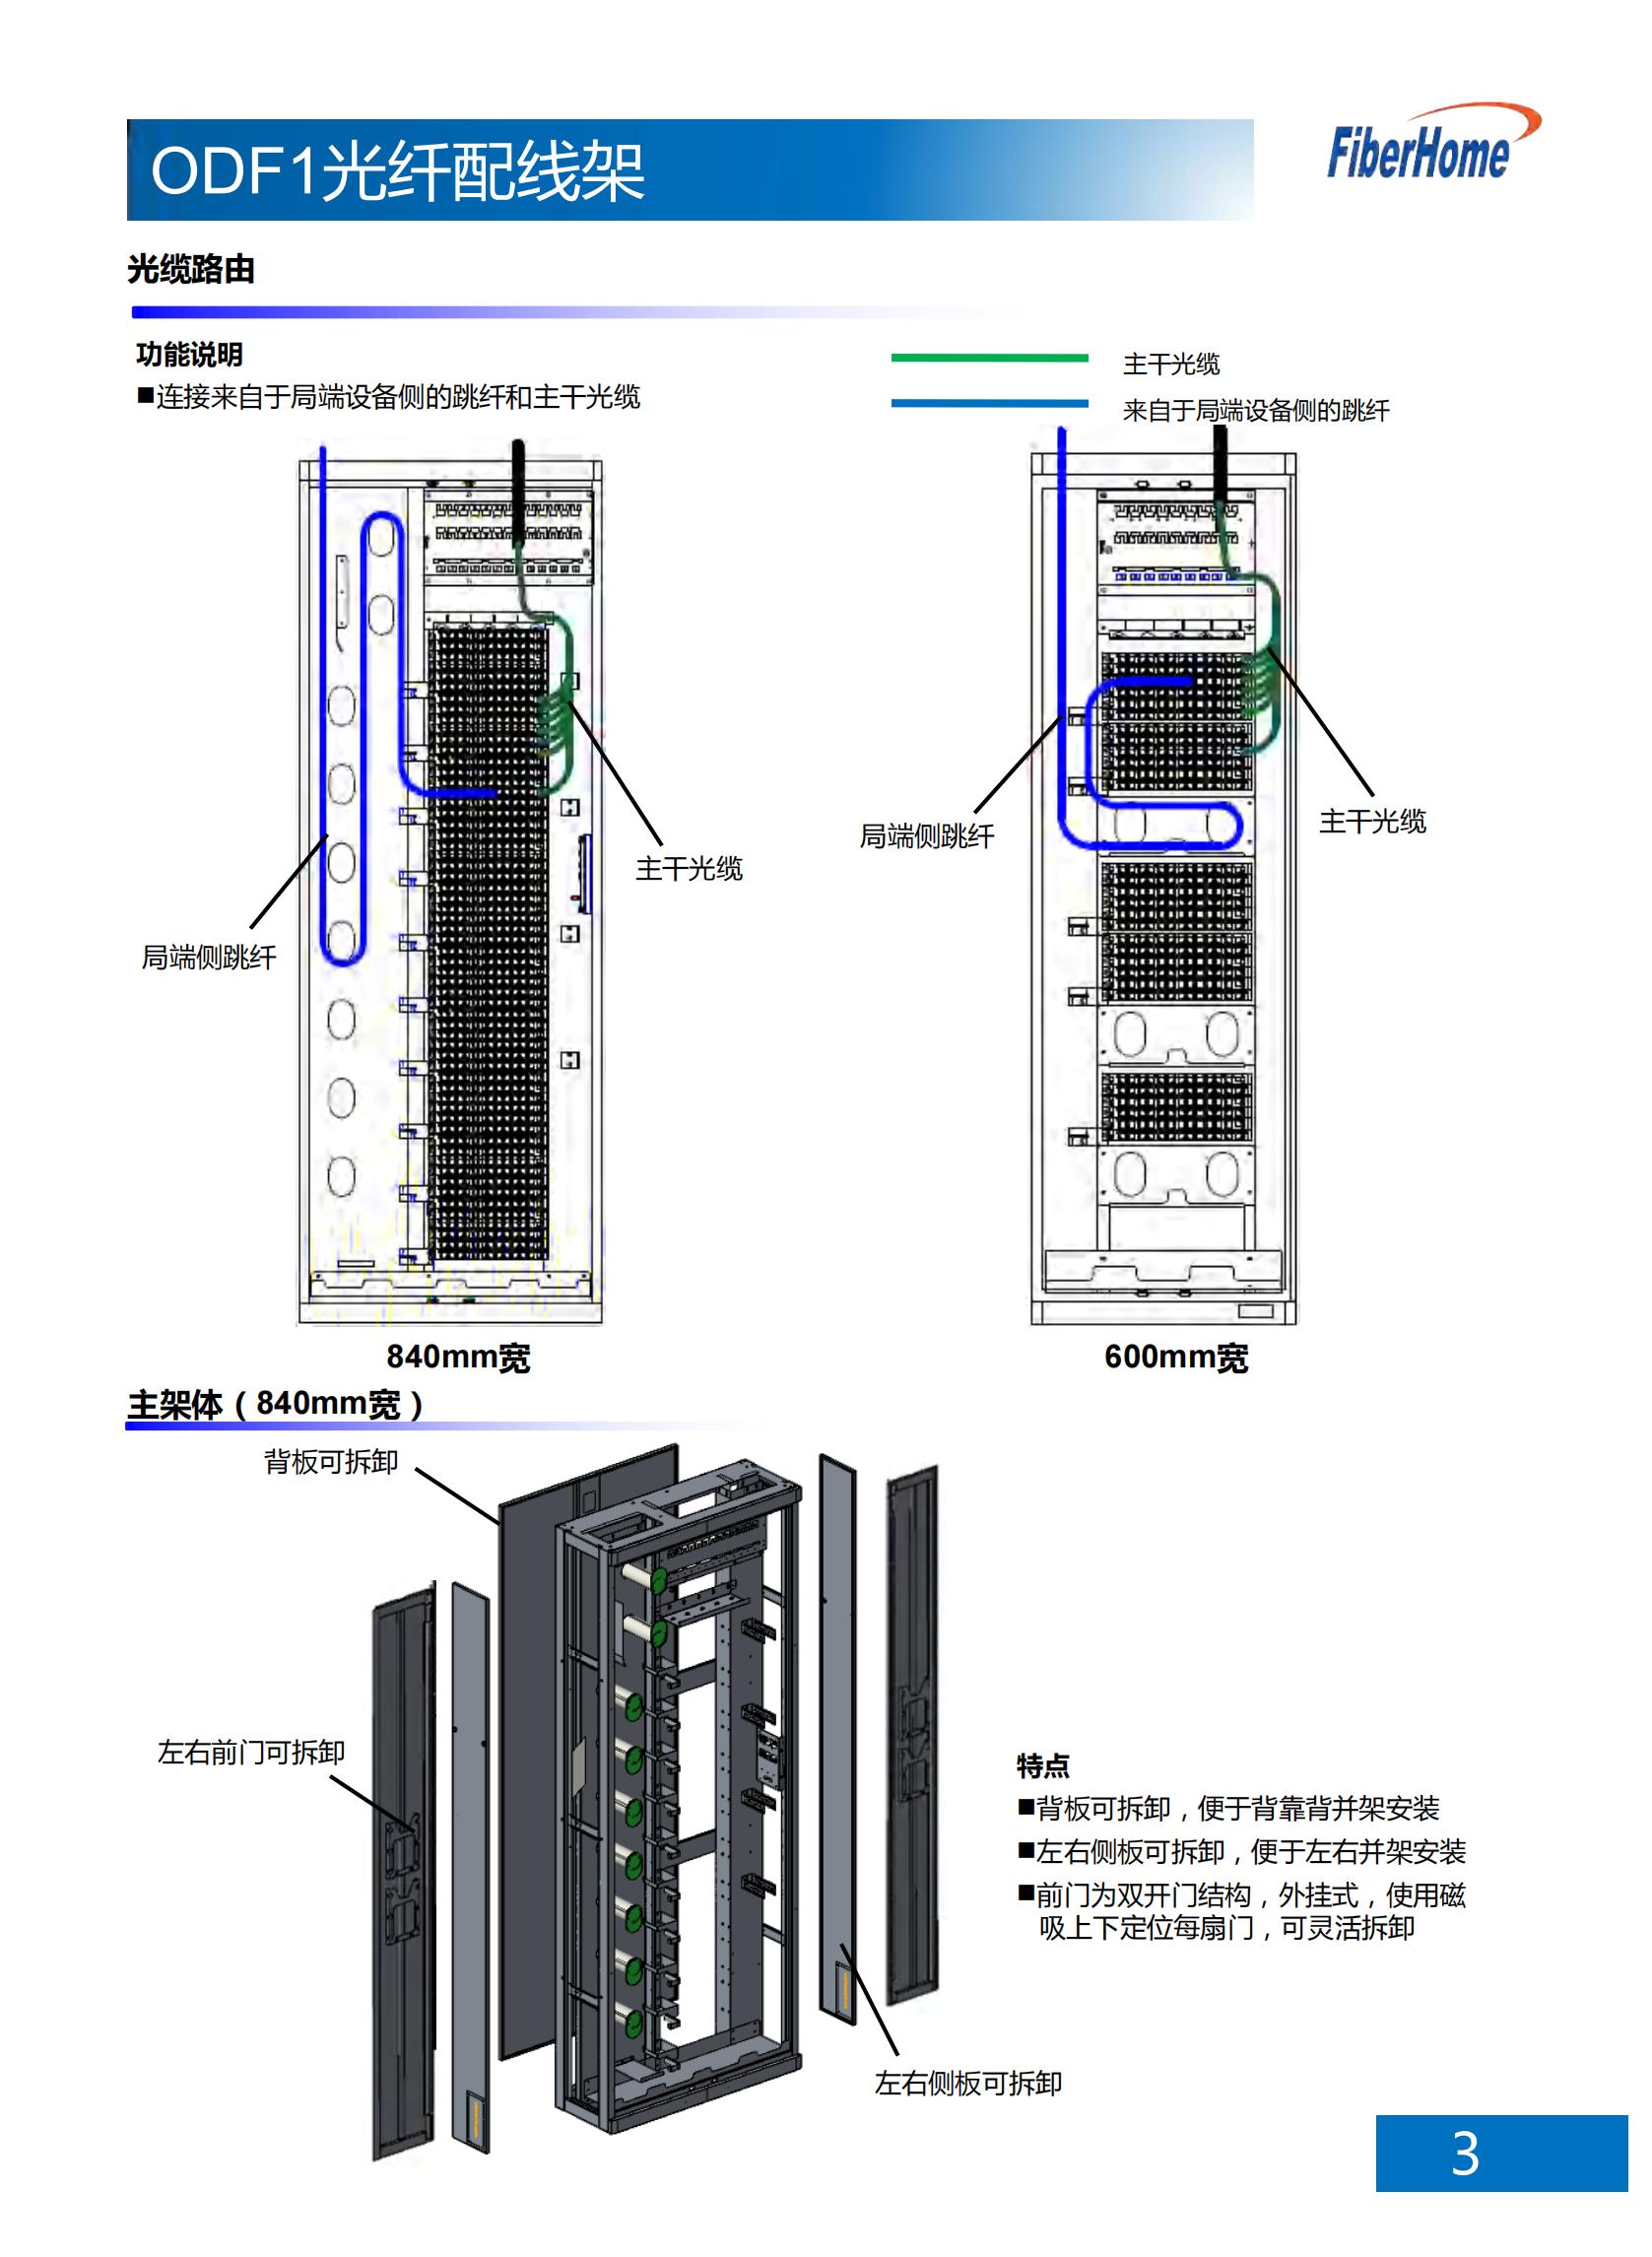 ODF101-864-A1-SC ODF光纤配线架 （864芯落地式 无子框型 全部含12芯SC熔配一体化单元）